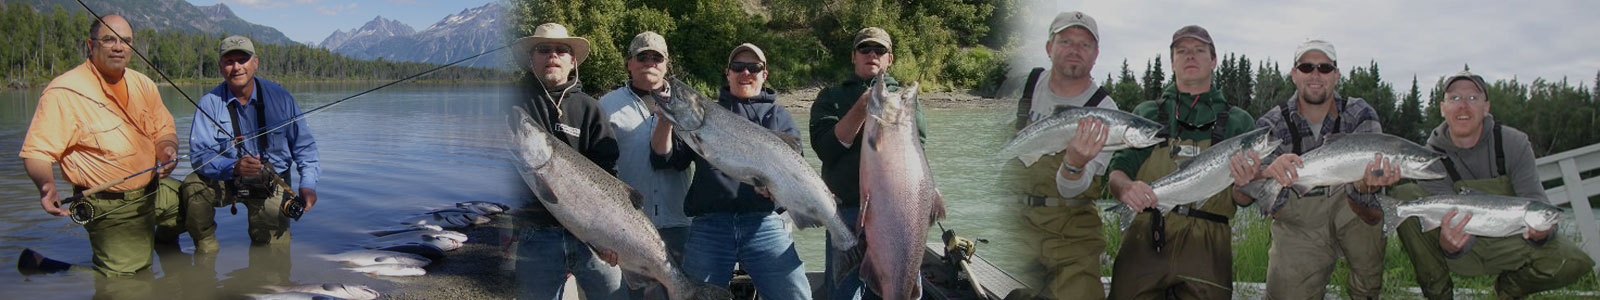 Alaska Salmon Fishing Packages